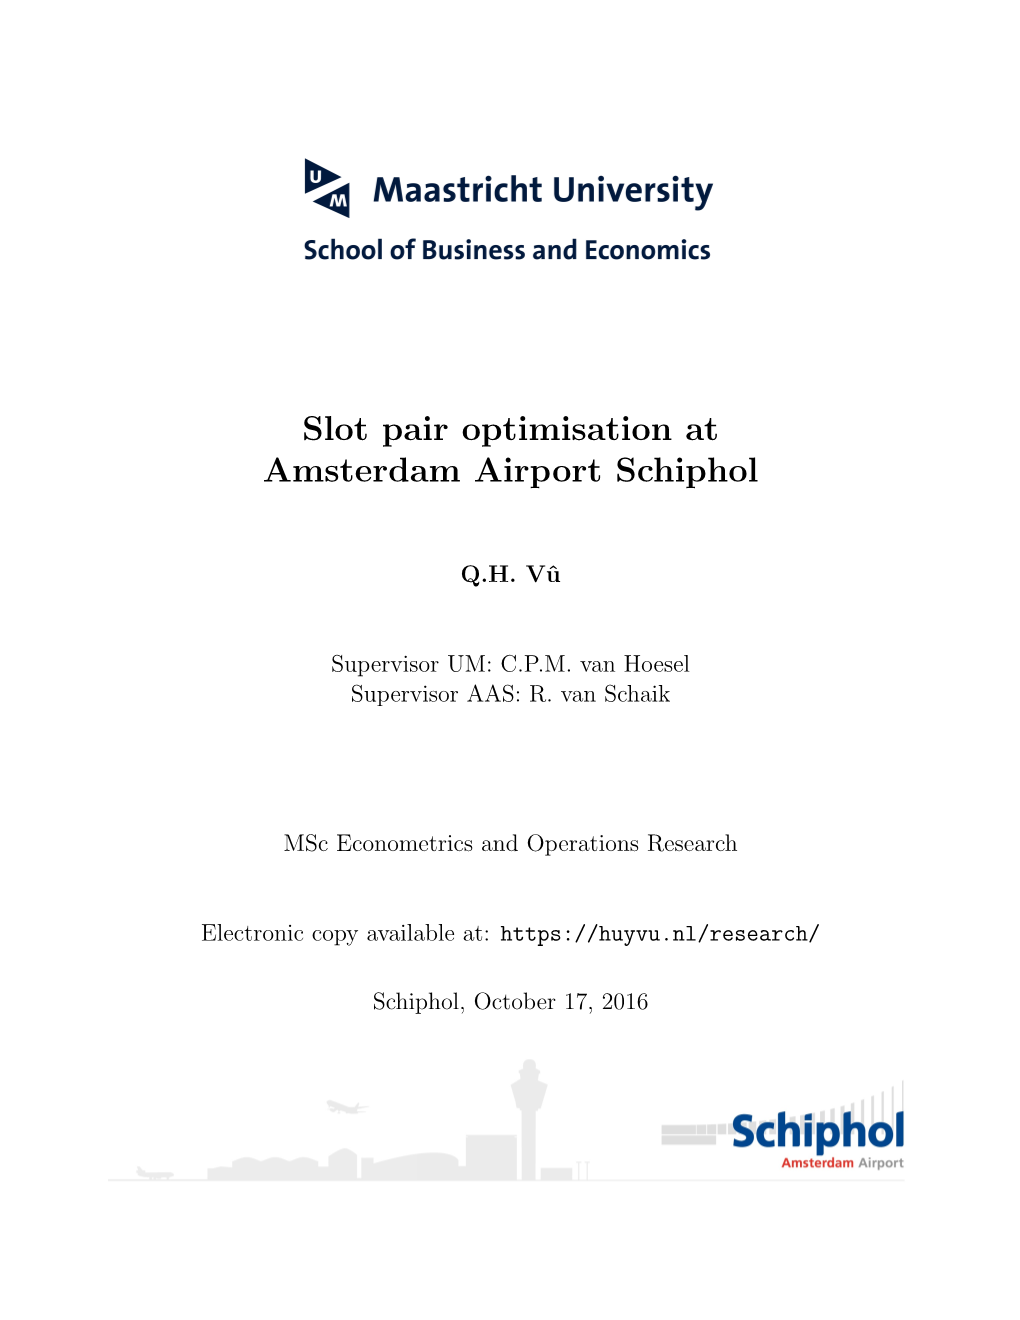 Slot Pair Optimisation at Amsterdam Airport Schiphol (2016)